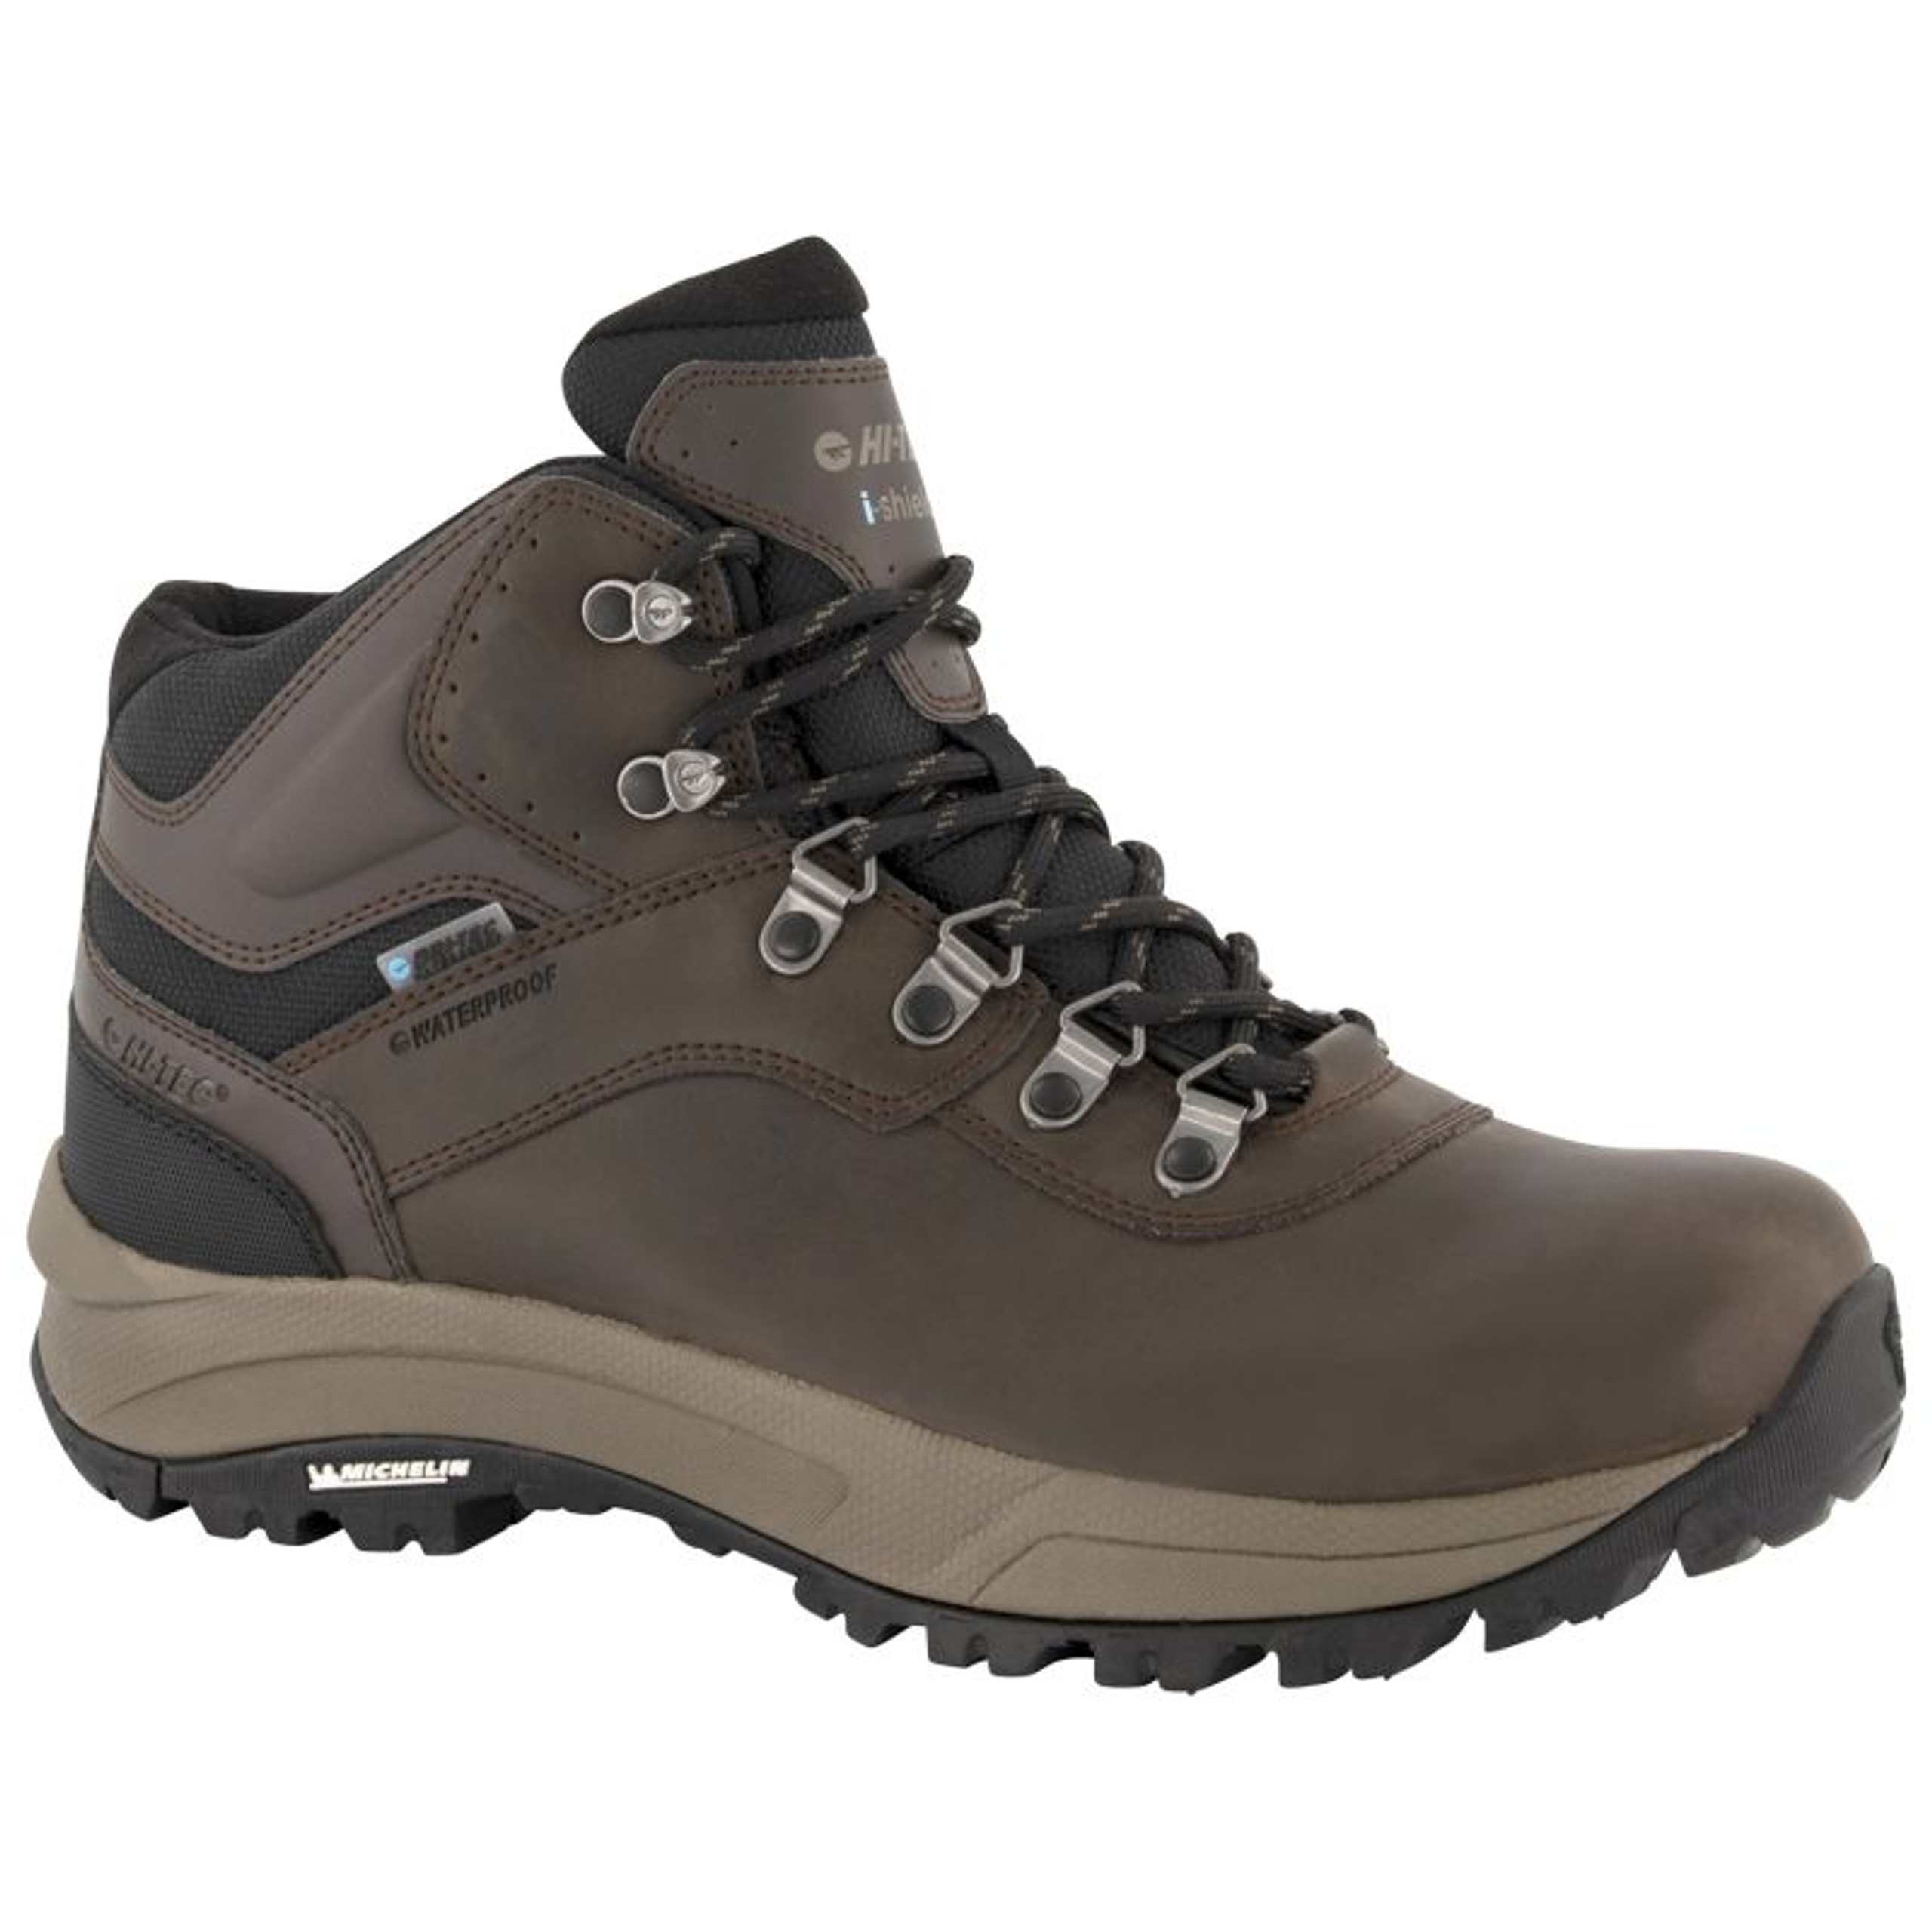 HI-TEC Altitude VI i WP waterproof, breathable mens hiking boots with ...